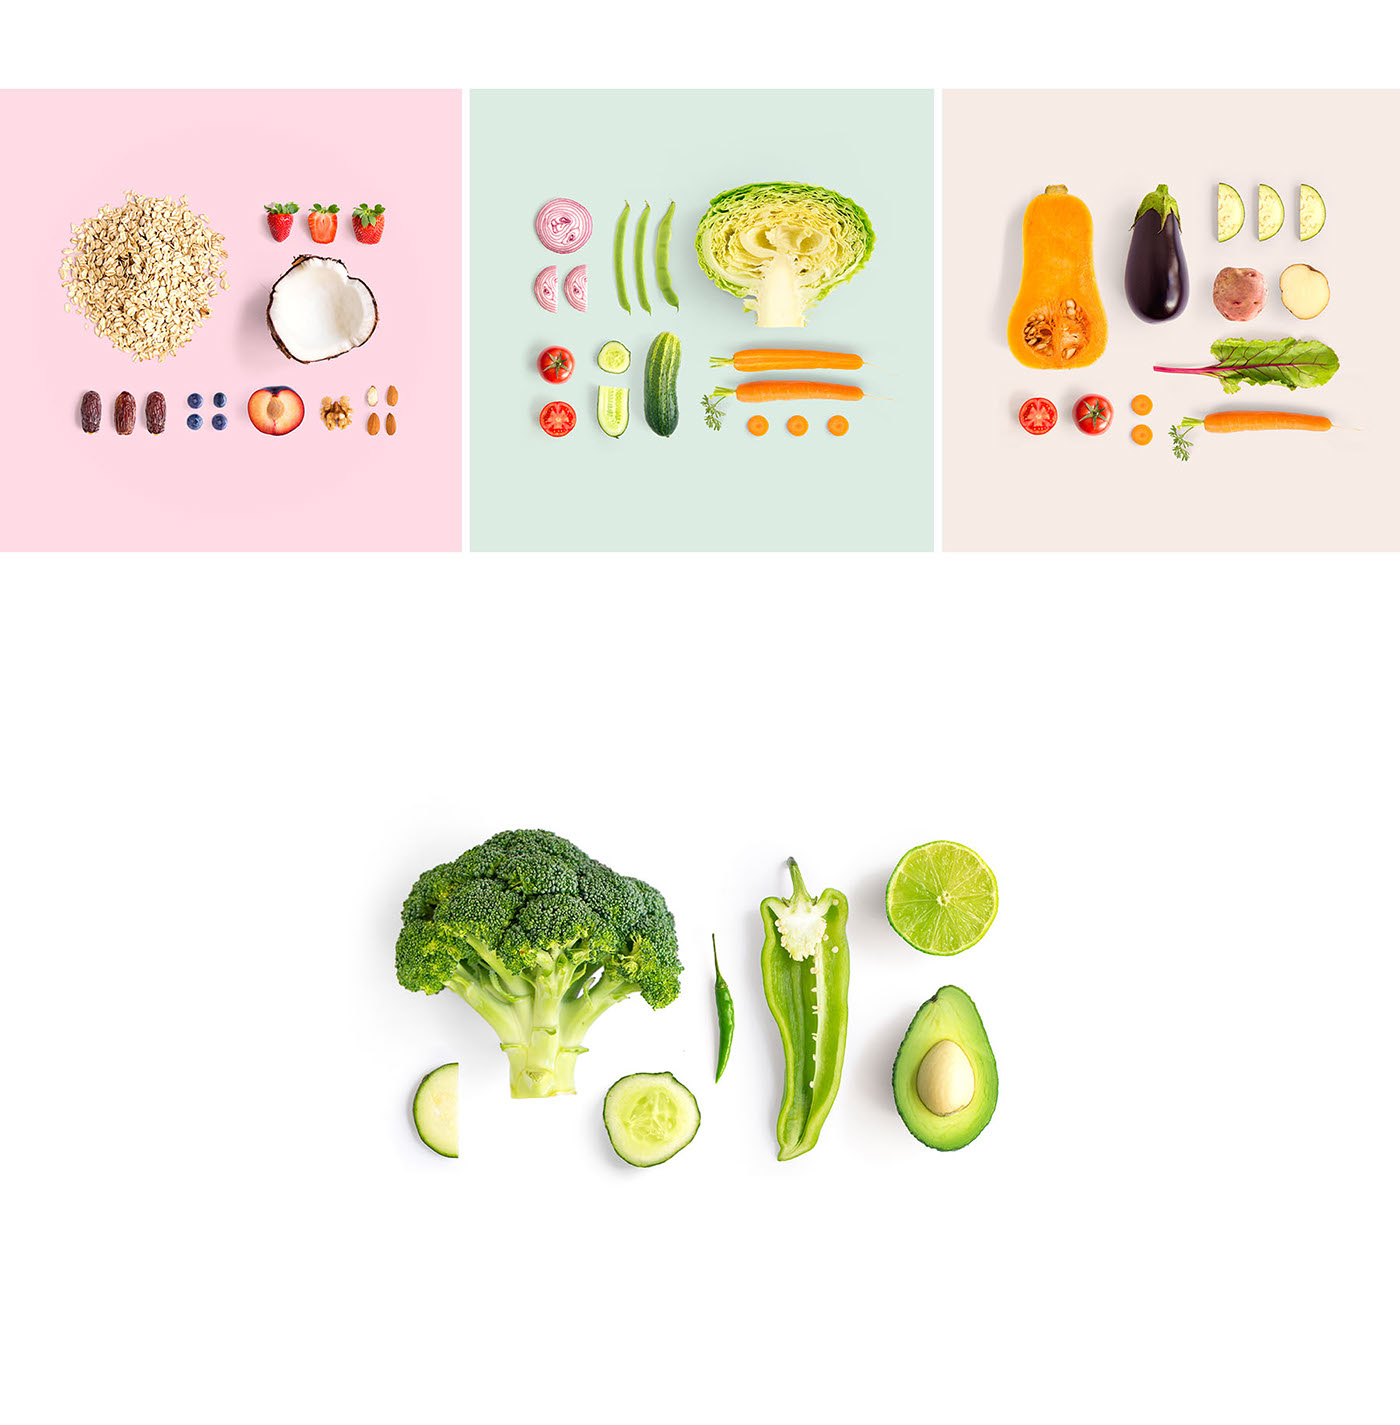 food design design photos creative branding  Packaging concept minimalistic